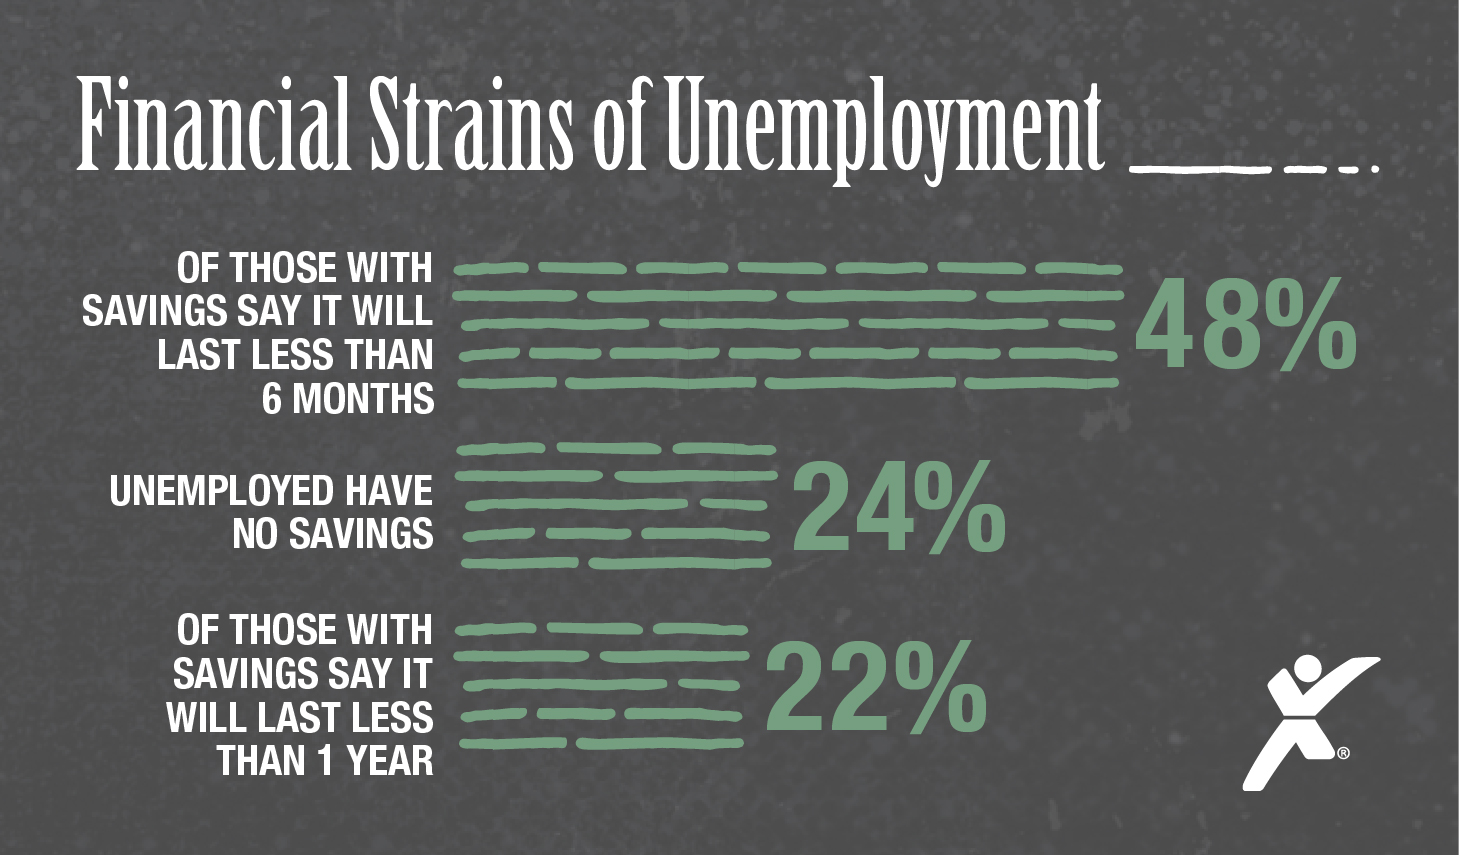 Financial Strains of Unemployment